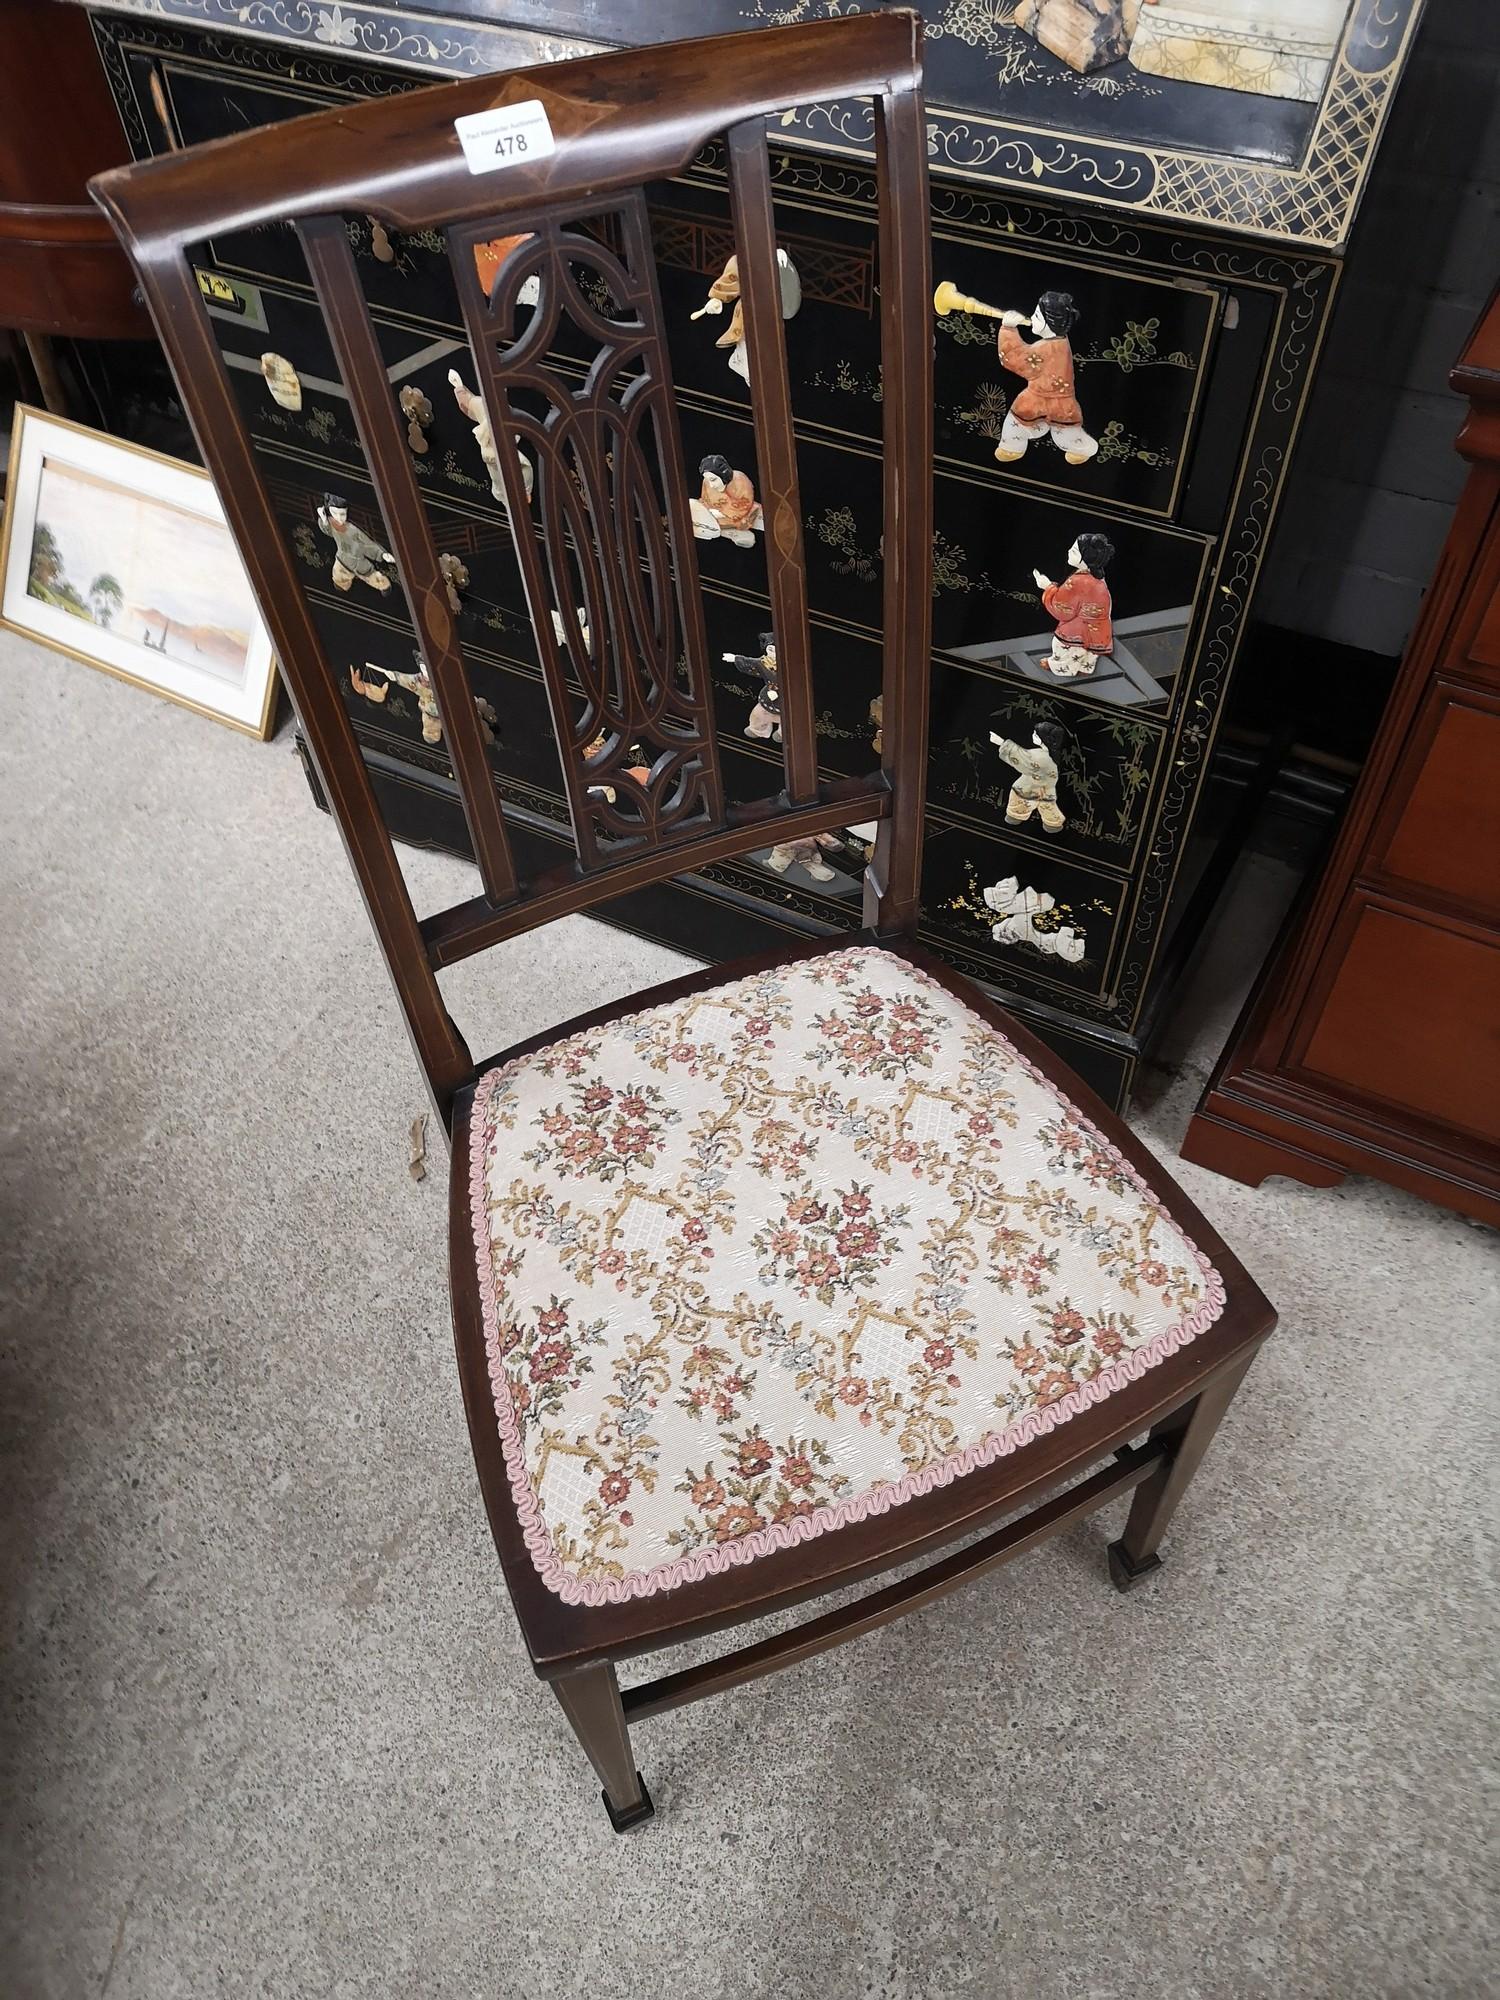 Edwardian bedroom chair in art nouveau design. - Image 3 of 3